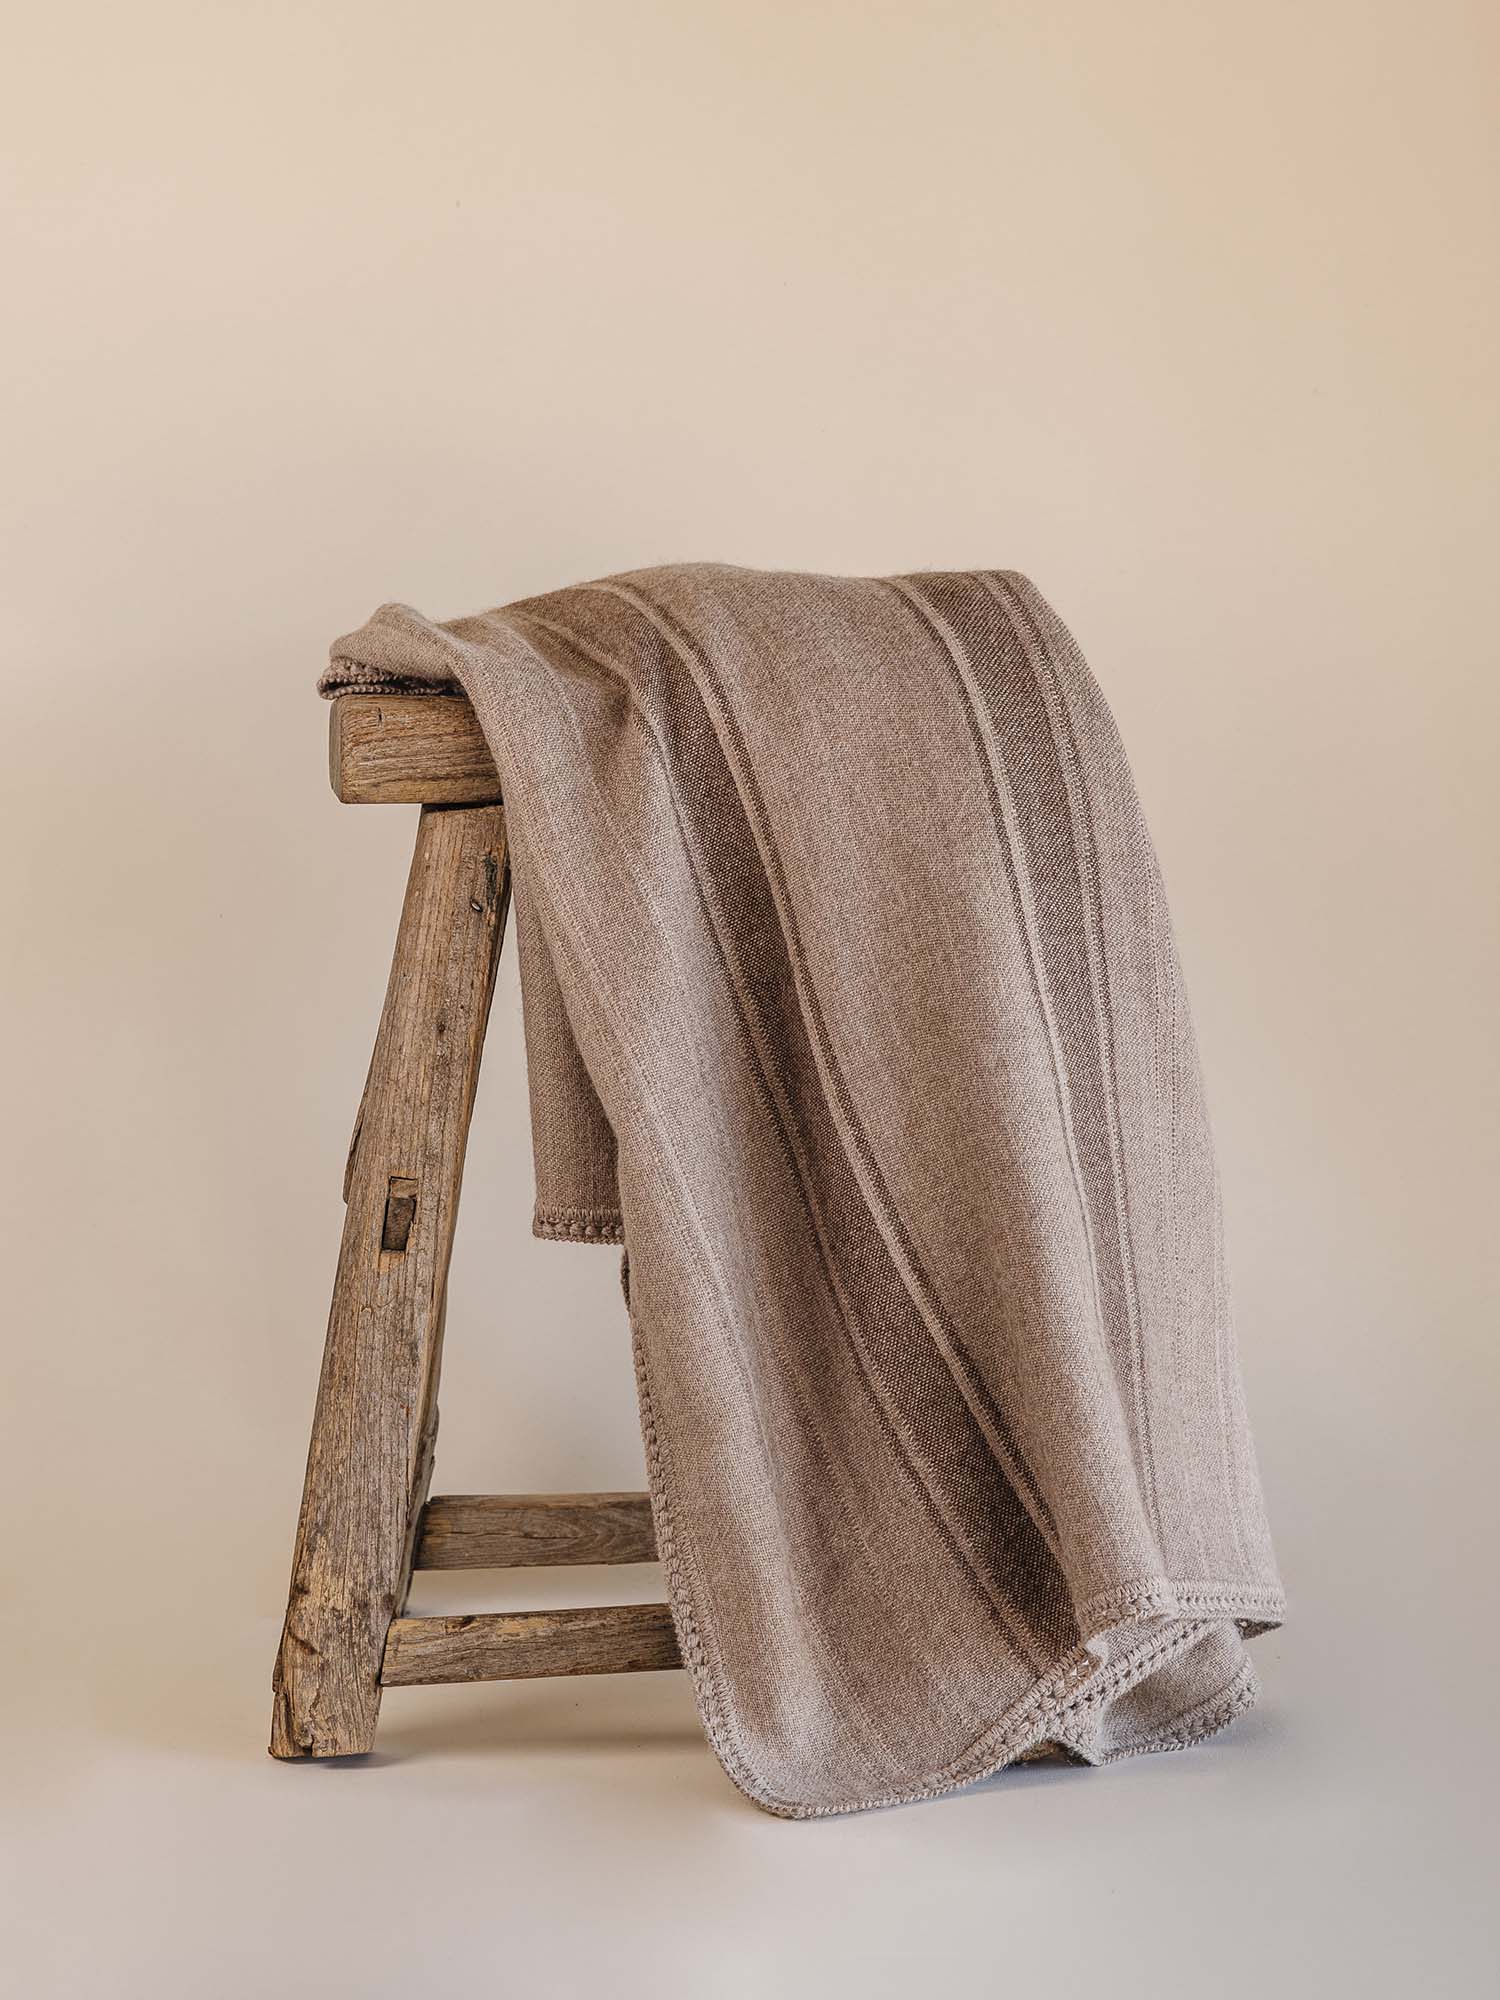 Brekke Throw | Fall Throw Blankets | Wool Throw Blankets | Plaid Throw Blankets | How to Style Throw Blankets | Home Decor | Fall Home Decor | Market by Modern Nest | Modern Nest | Scottsdale, AZ | Design, Build, Furnish